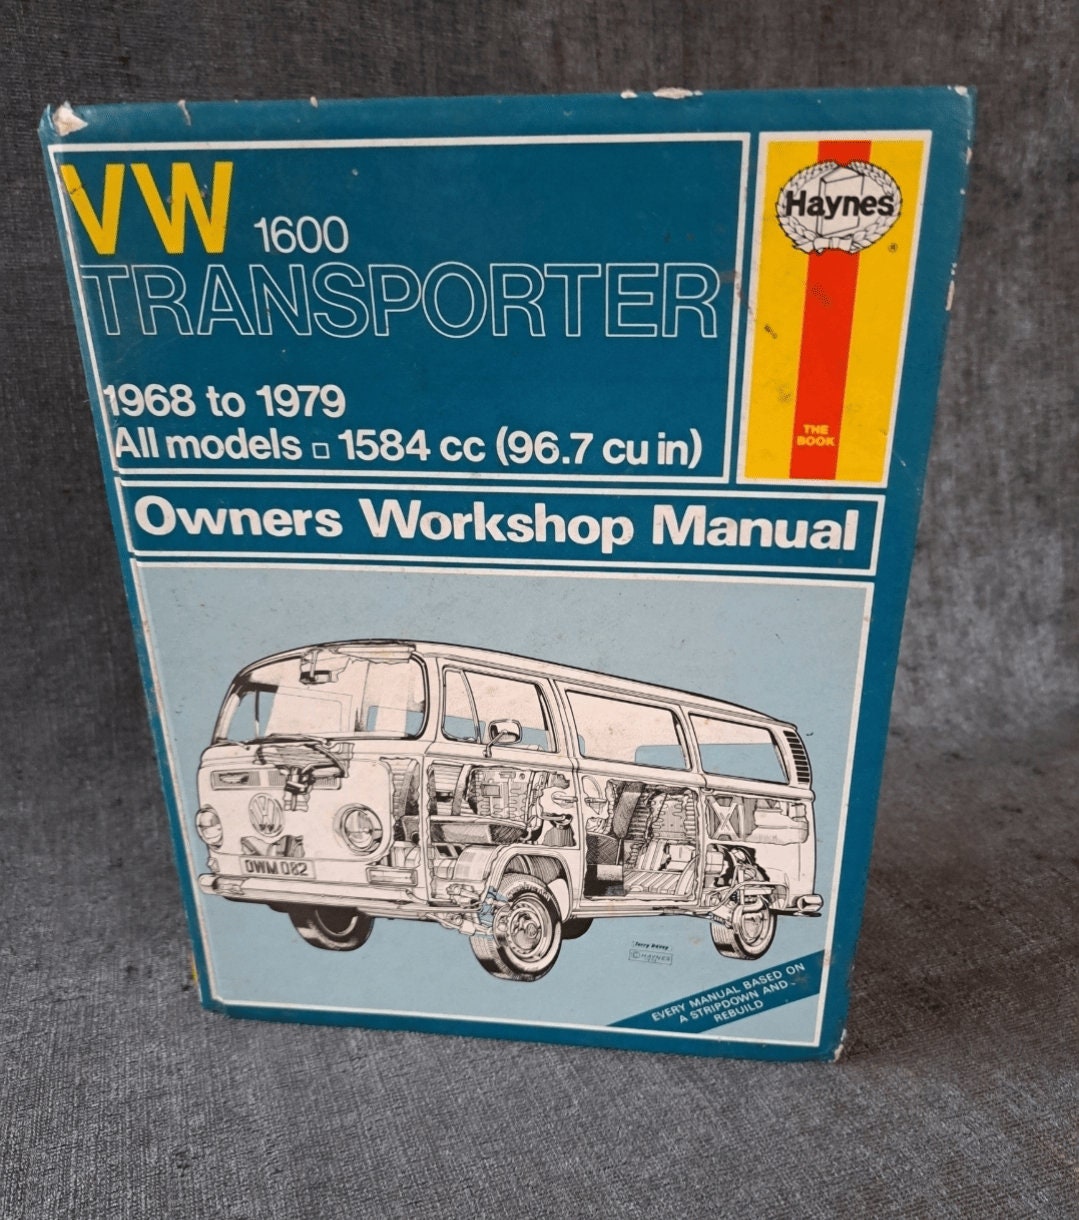 Haynes VW Transporter Manual - Etsy Canada